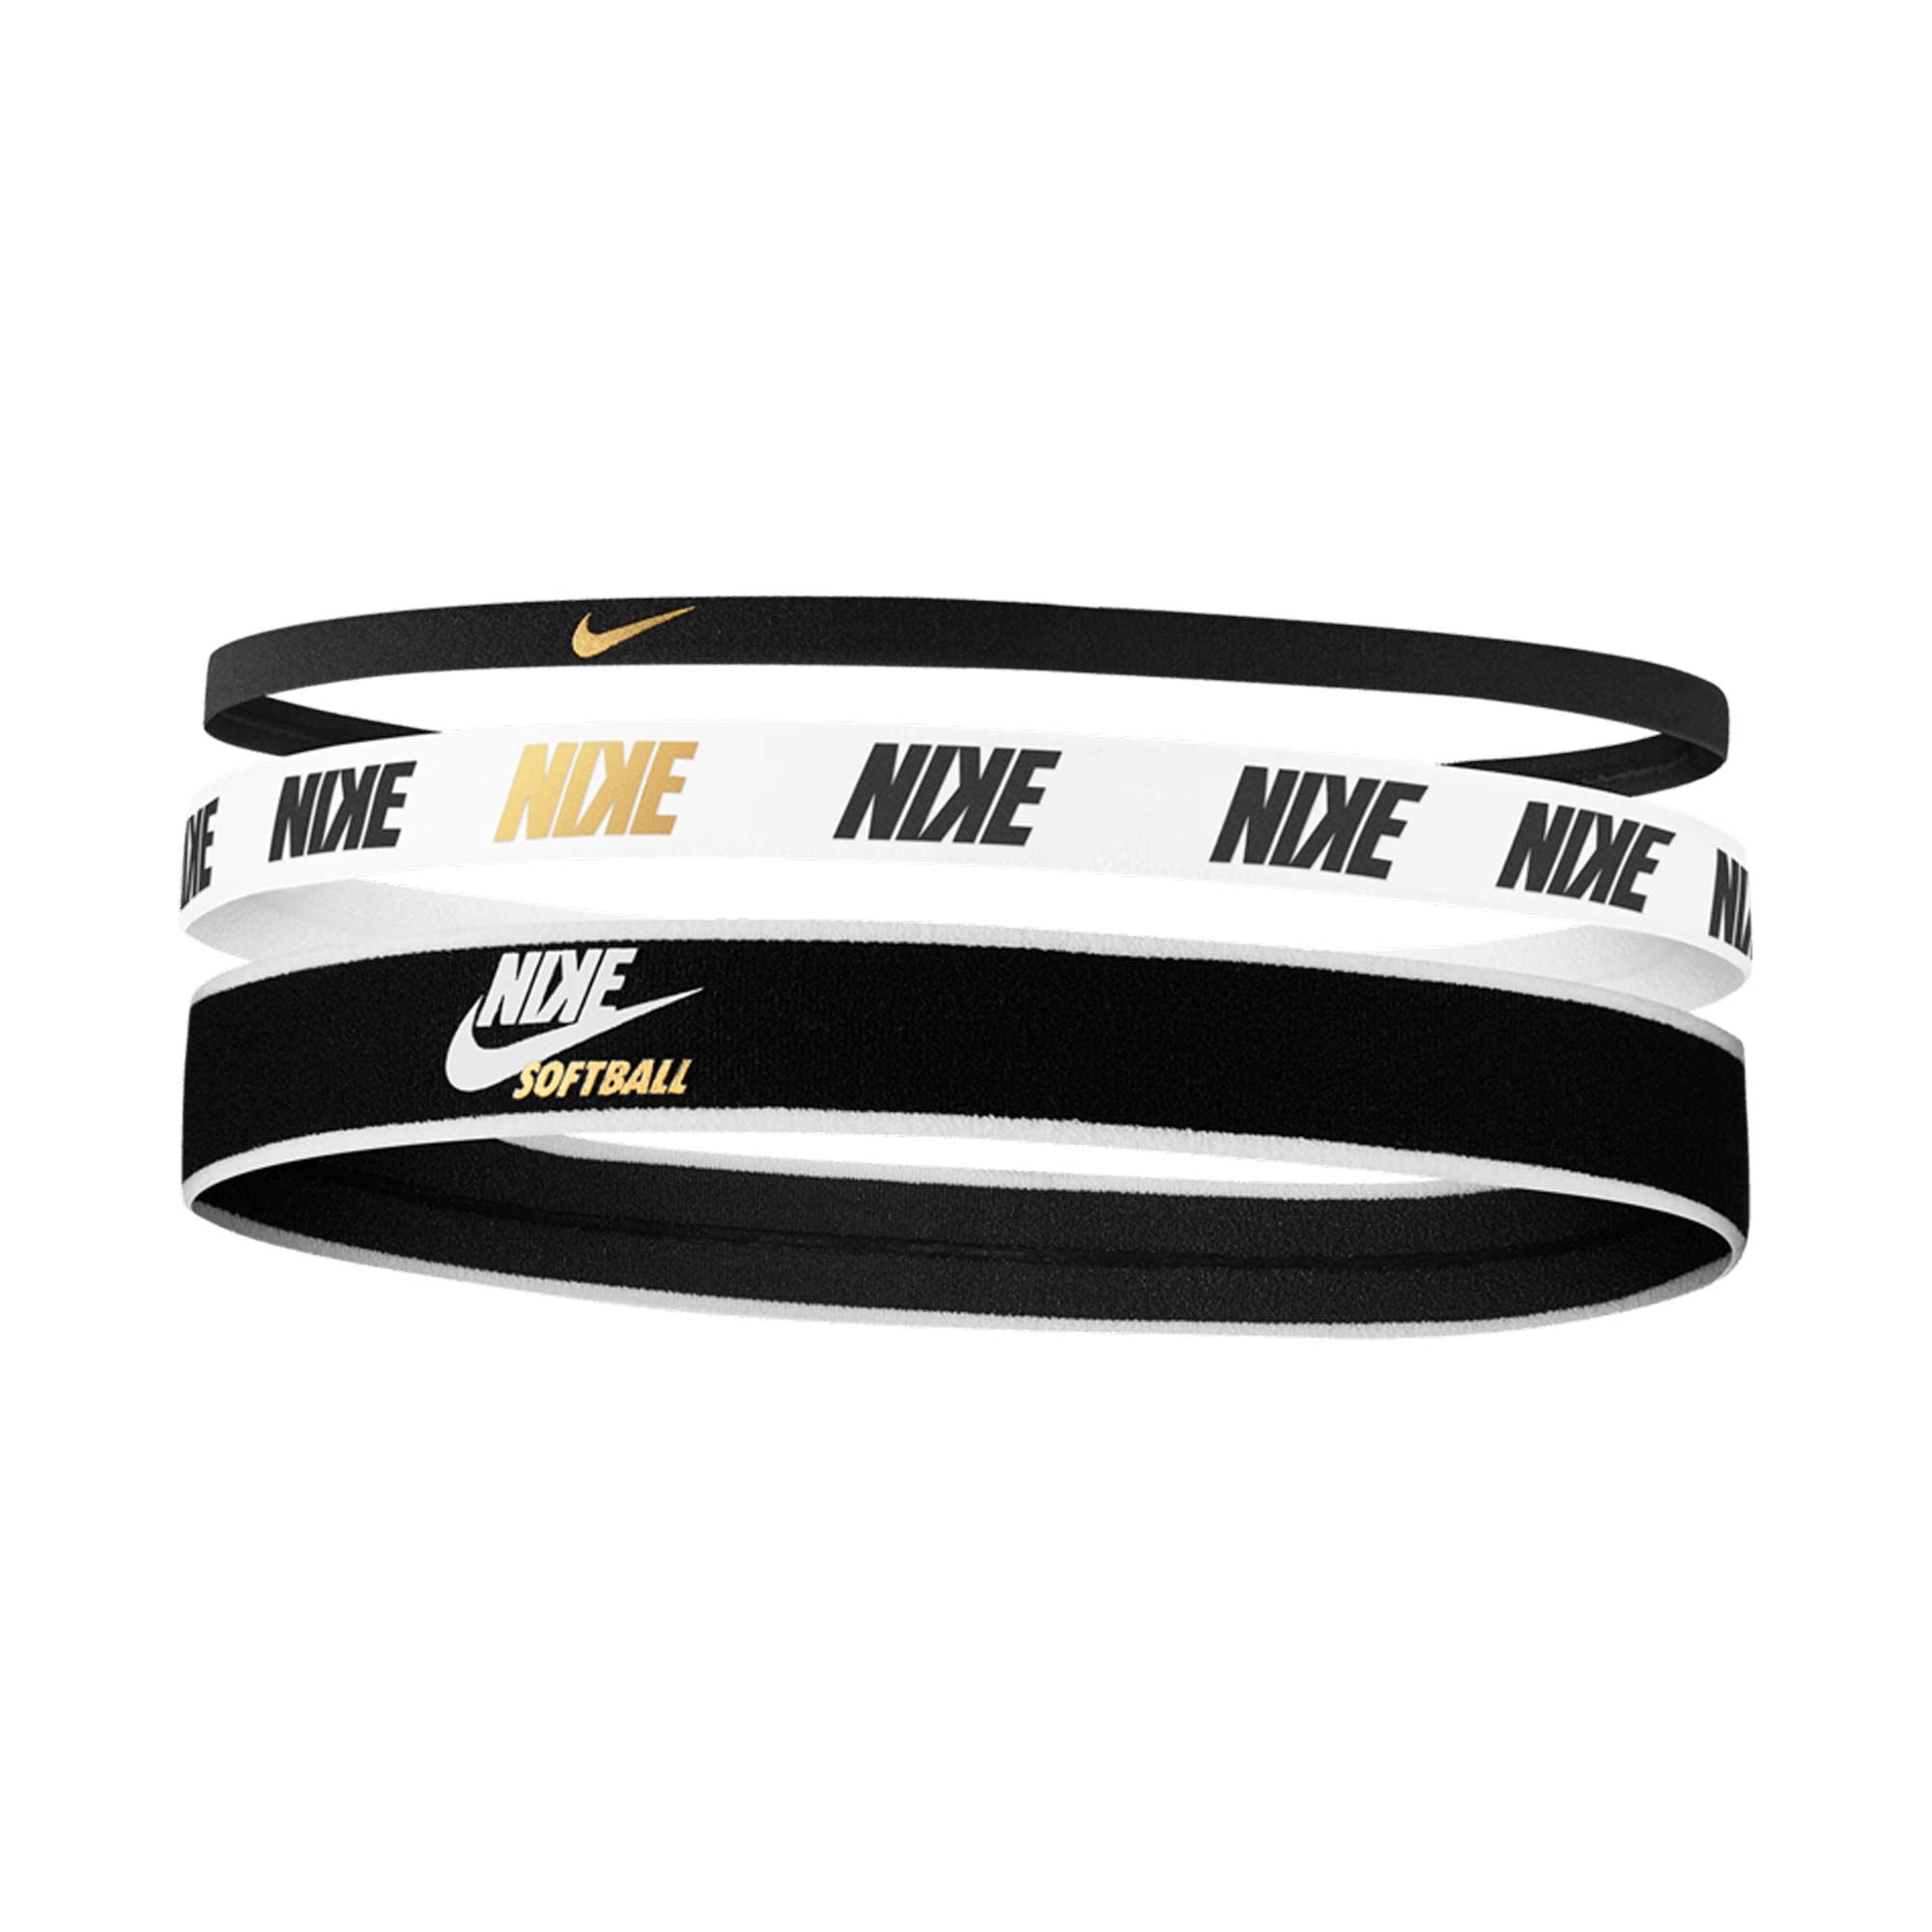 Nike Sotball Mixed Width Headbands  -3 PK BLACK/WHITE/METALLIC GOLD OSFM